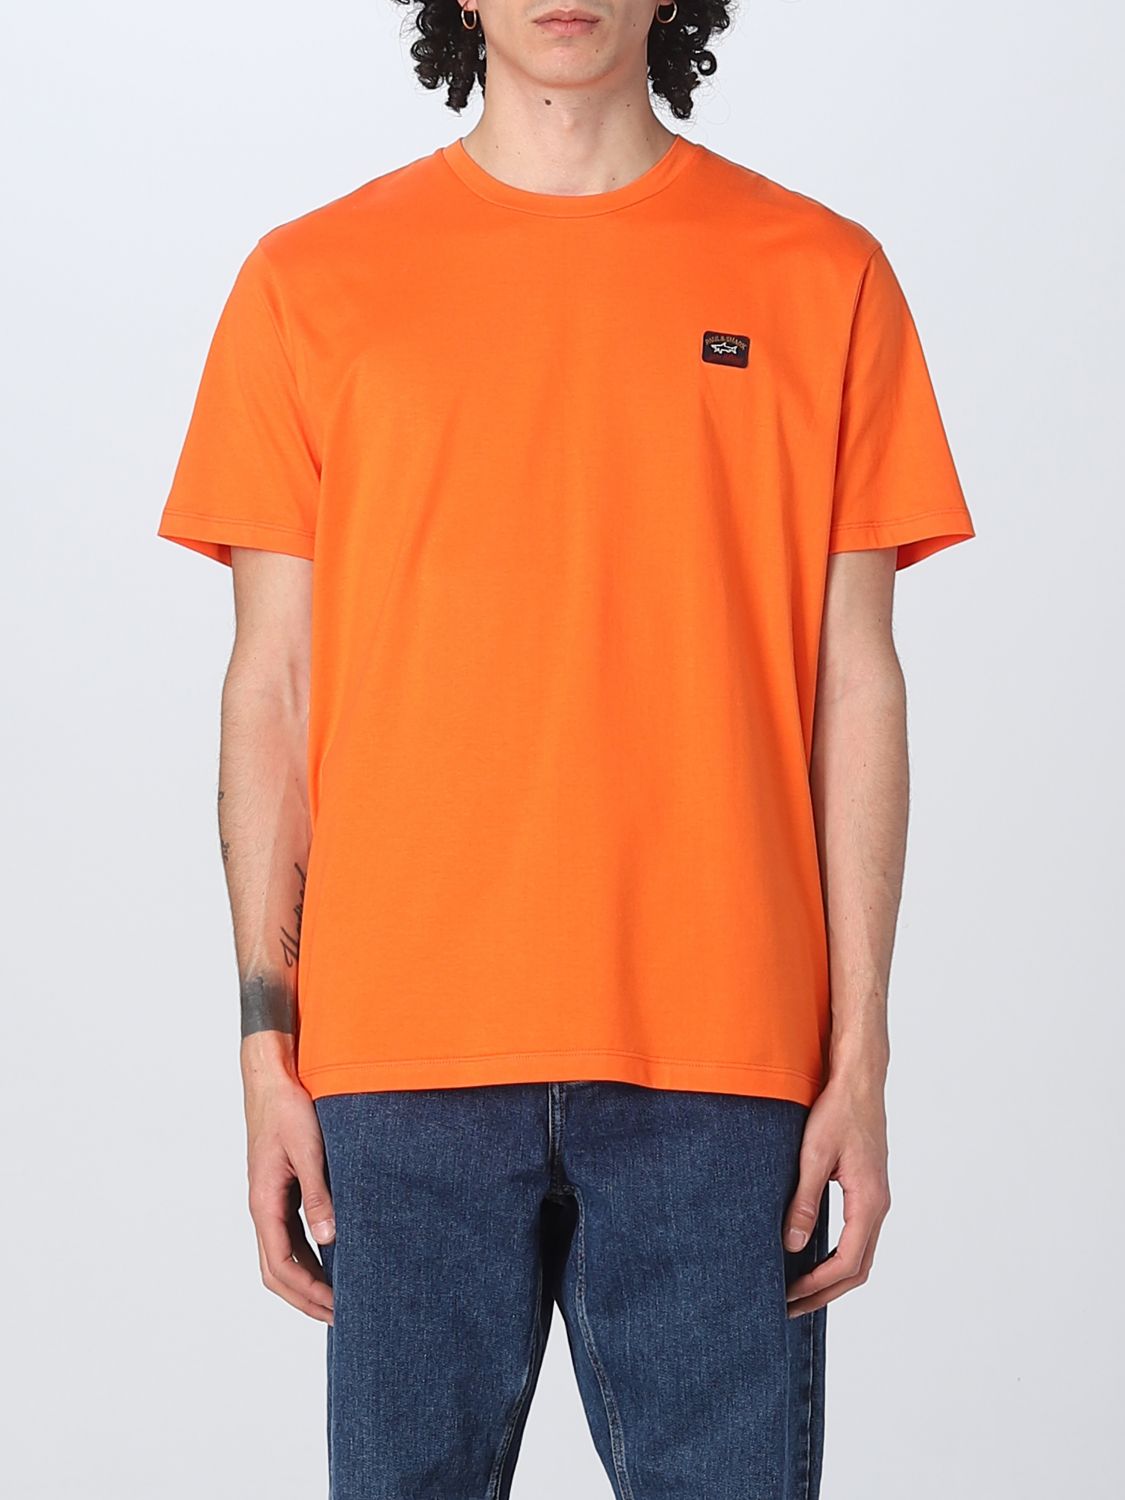 Paul & Shark T-shirt  Men Color Orange